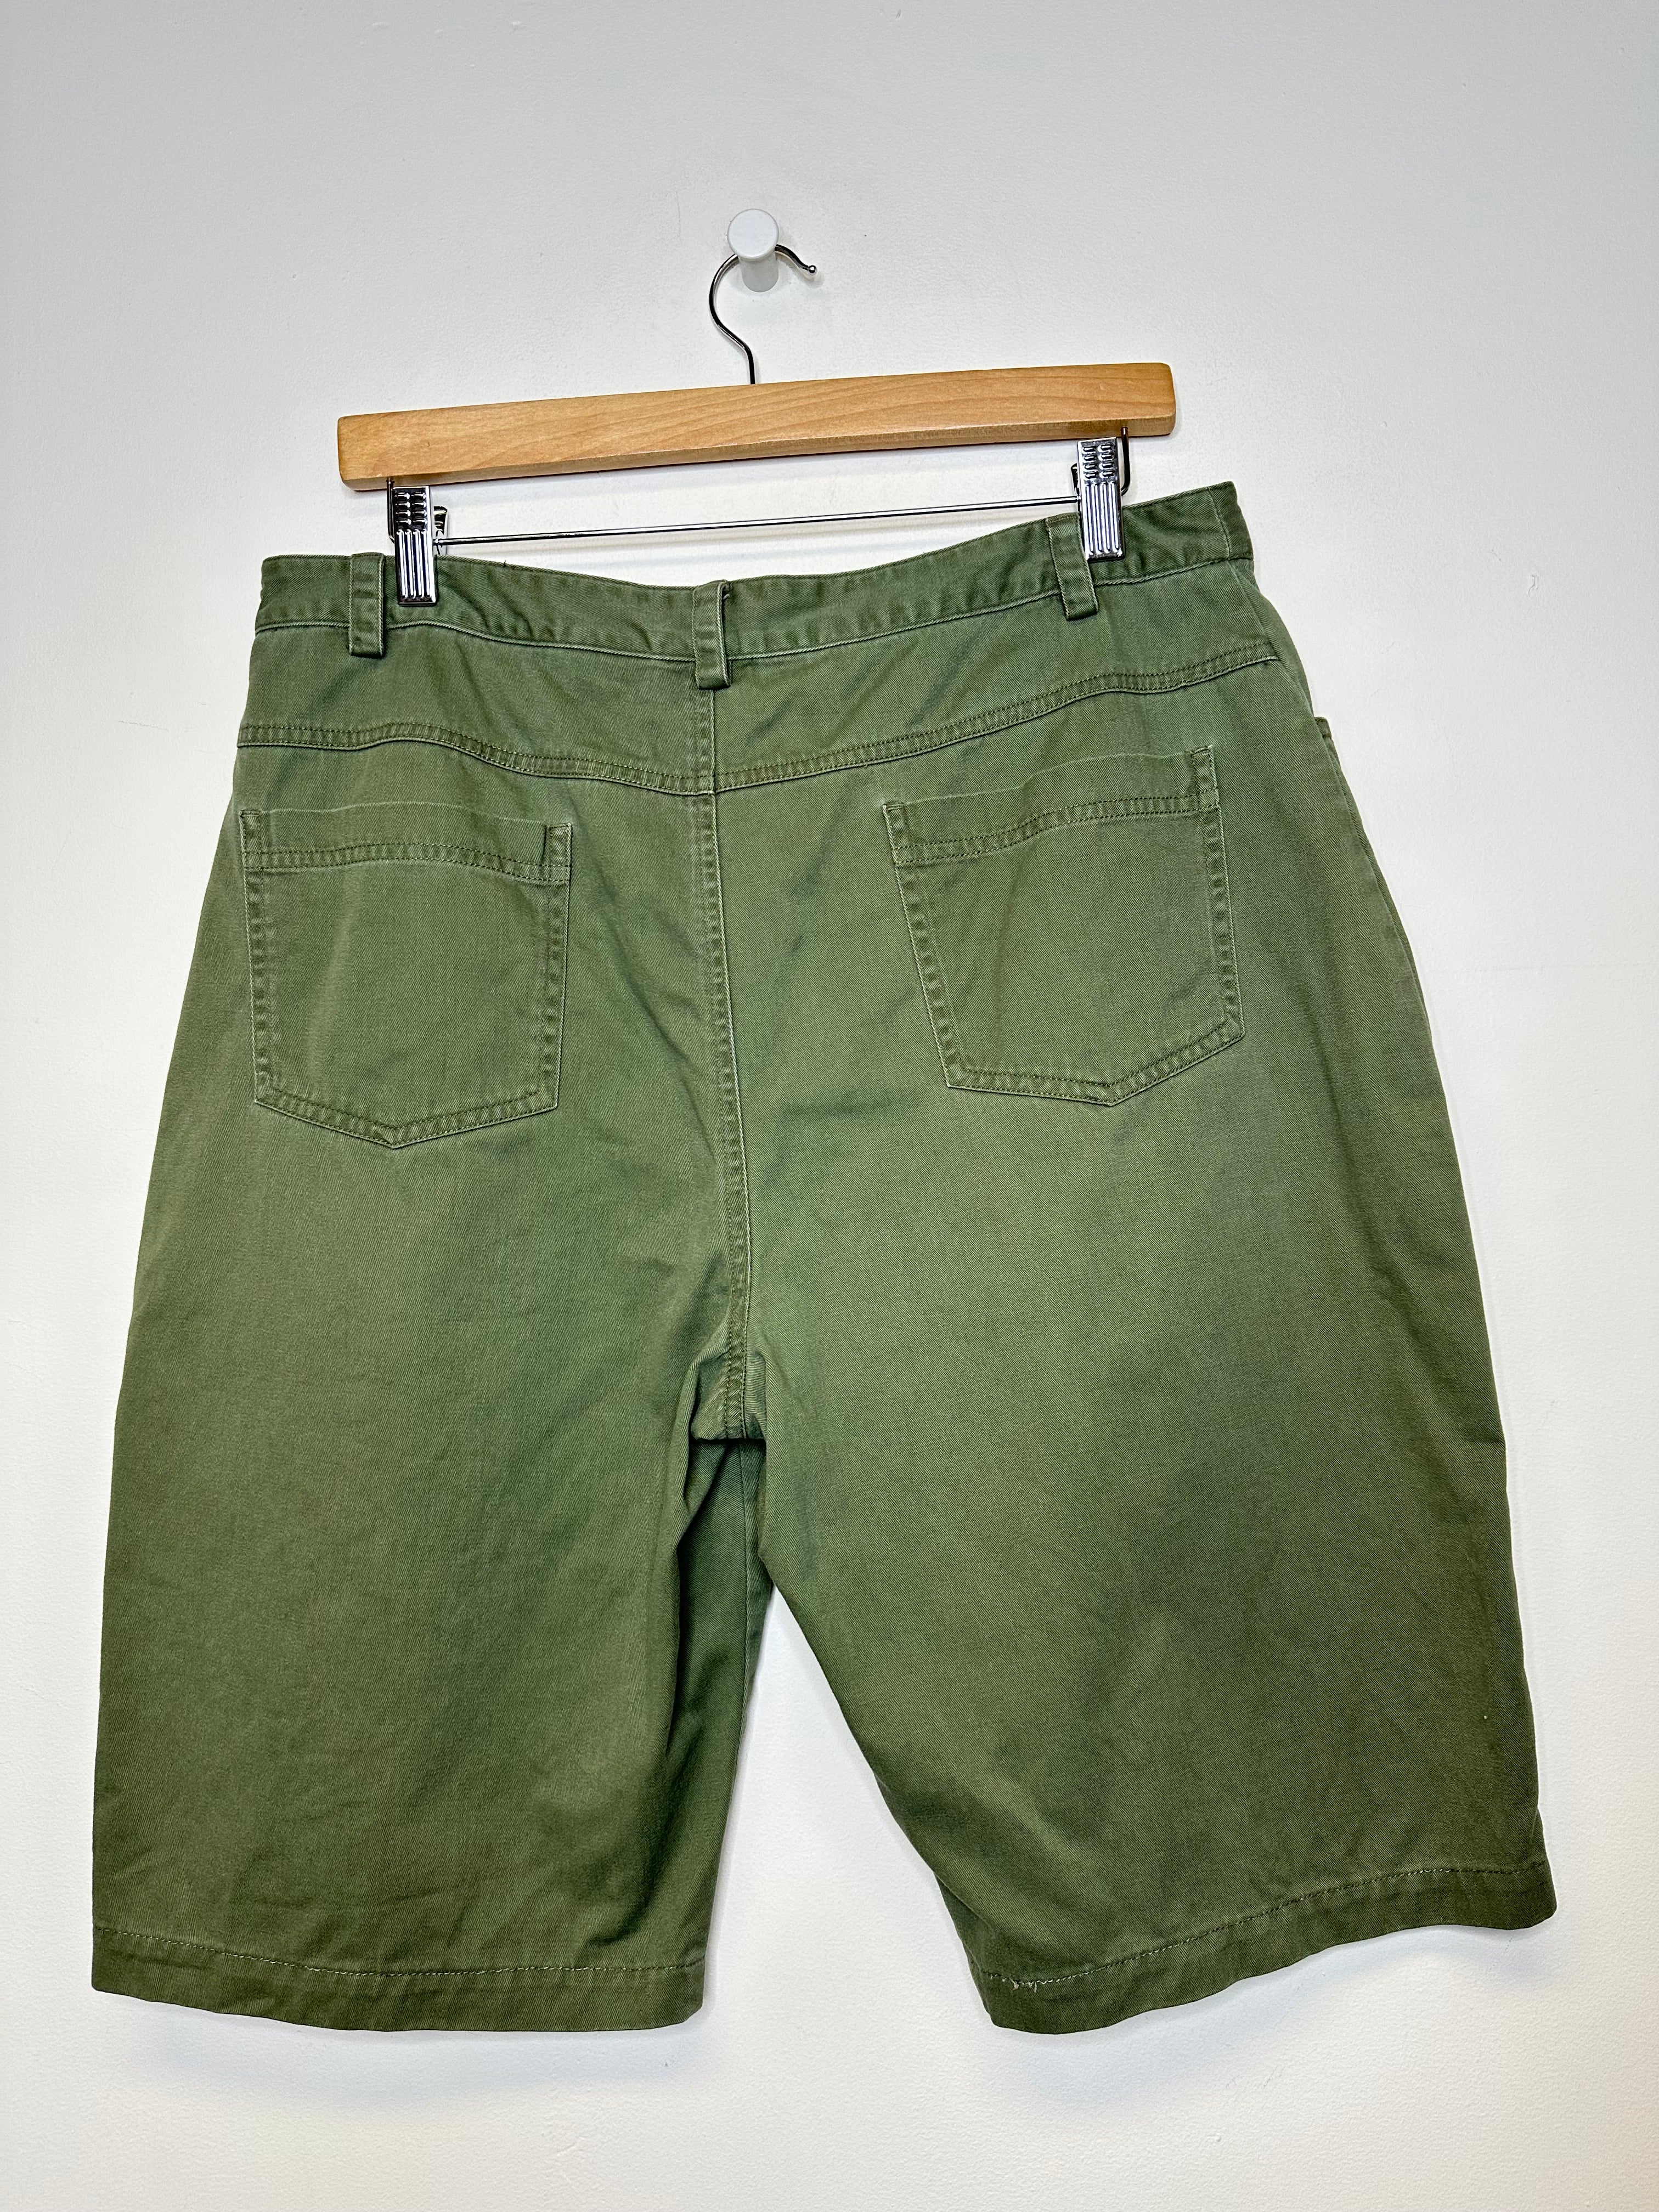 Vintage Army Green Shorts - L/34